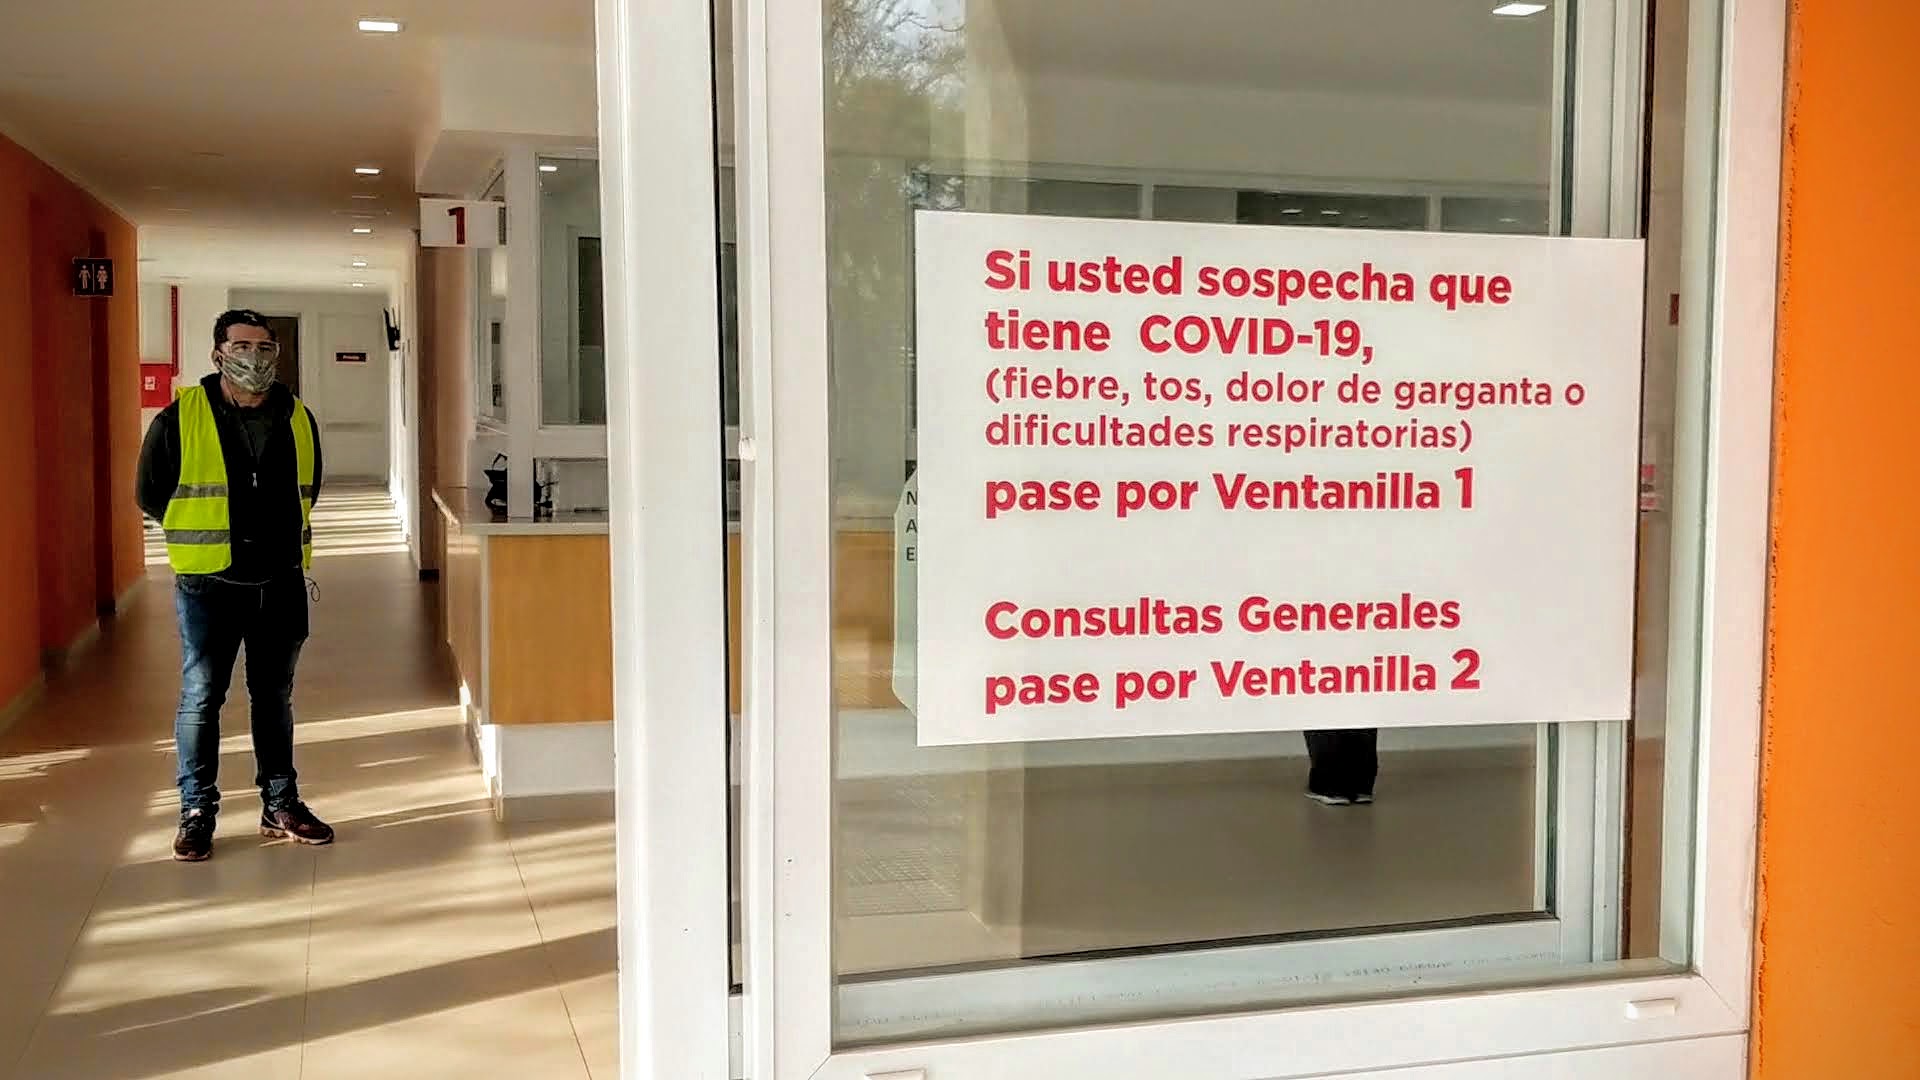 Coronavirus: las 5 camas de la Terapia Intensiva del Hospital están ocupadas